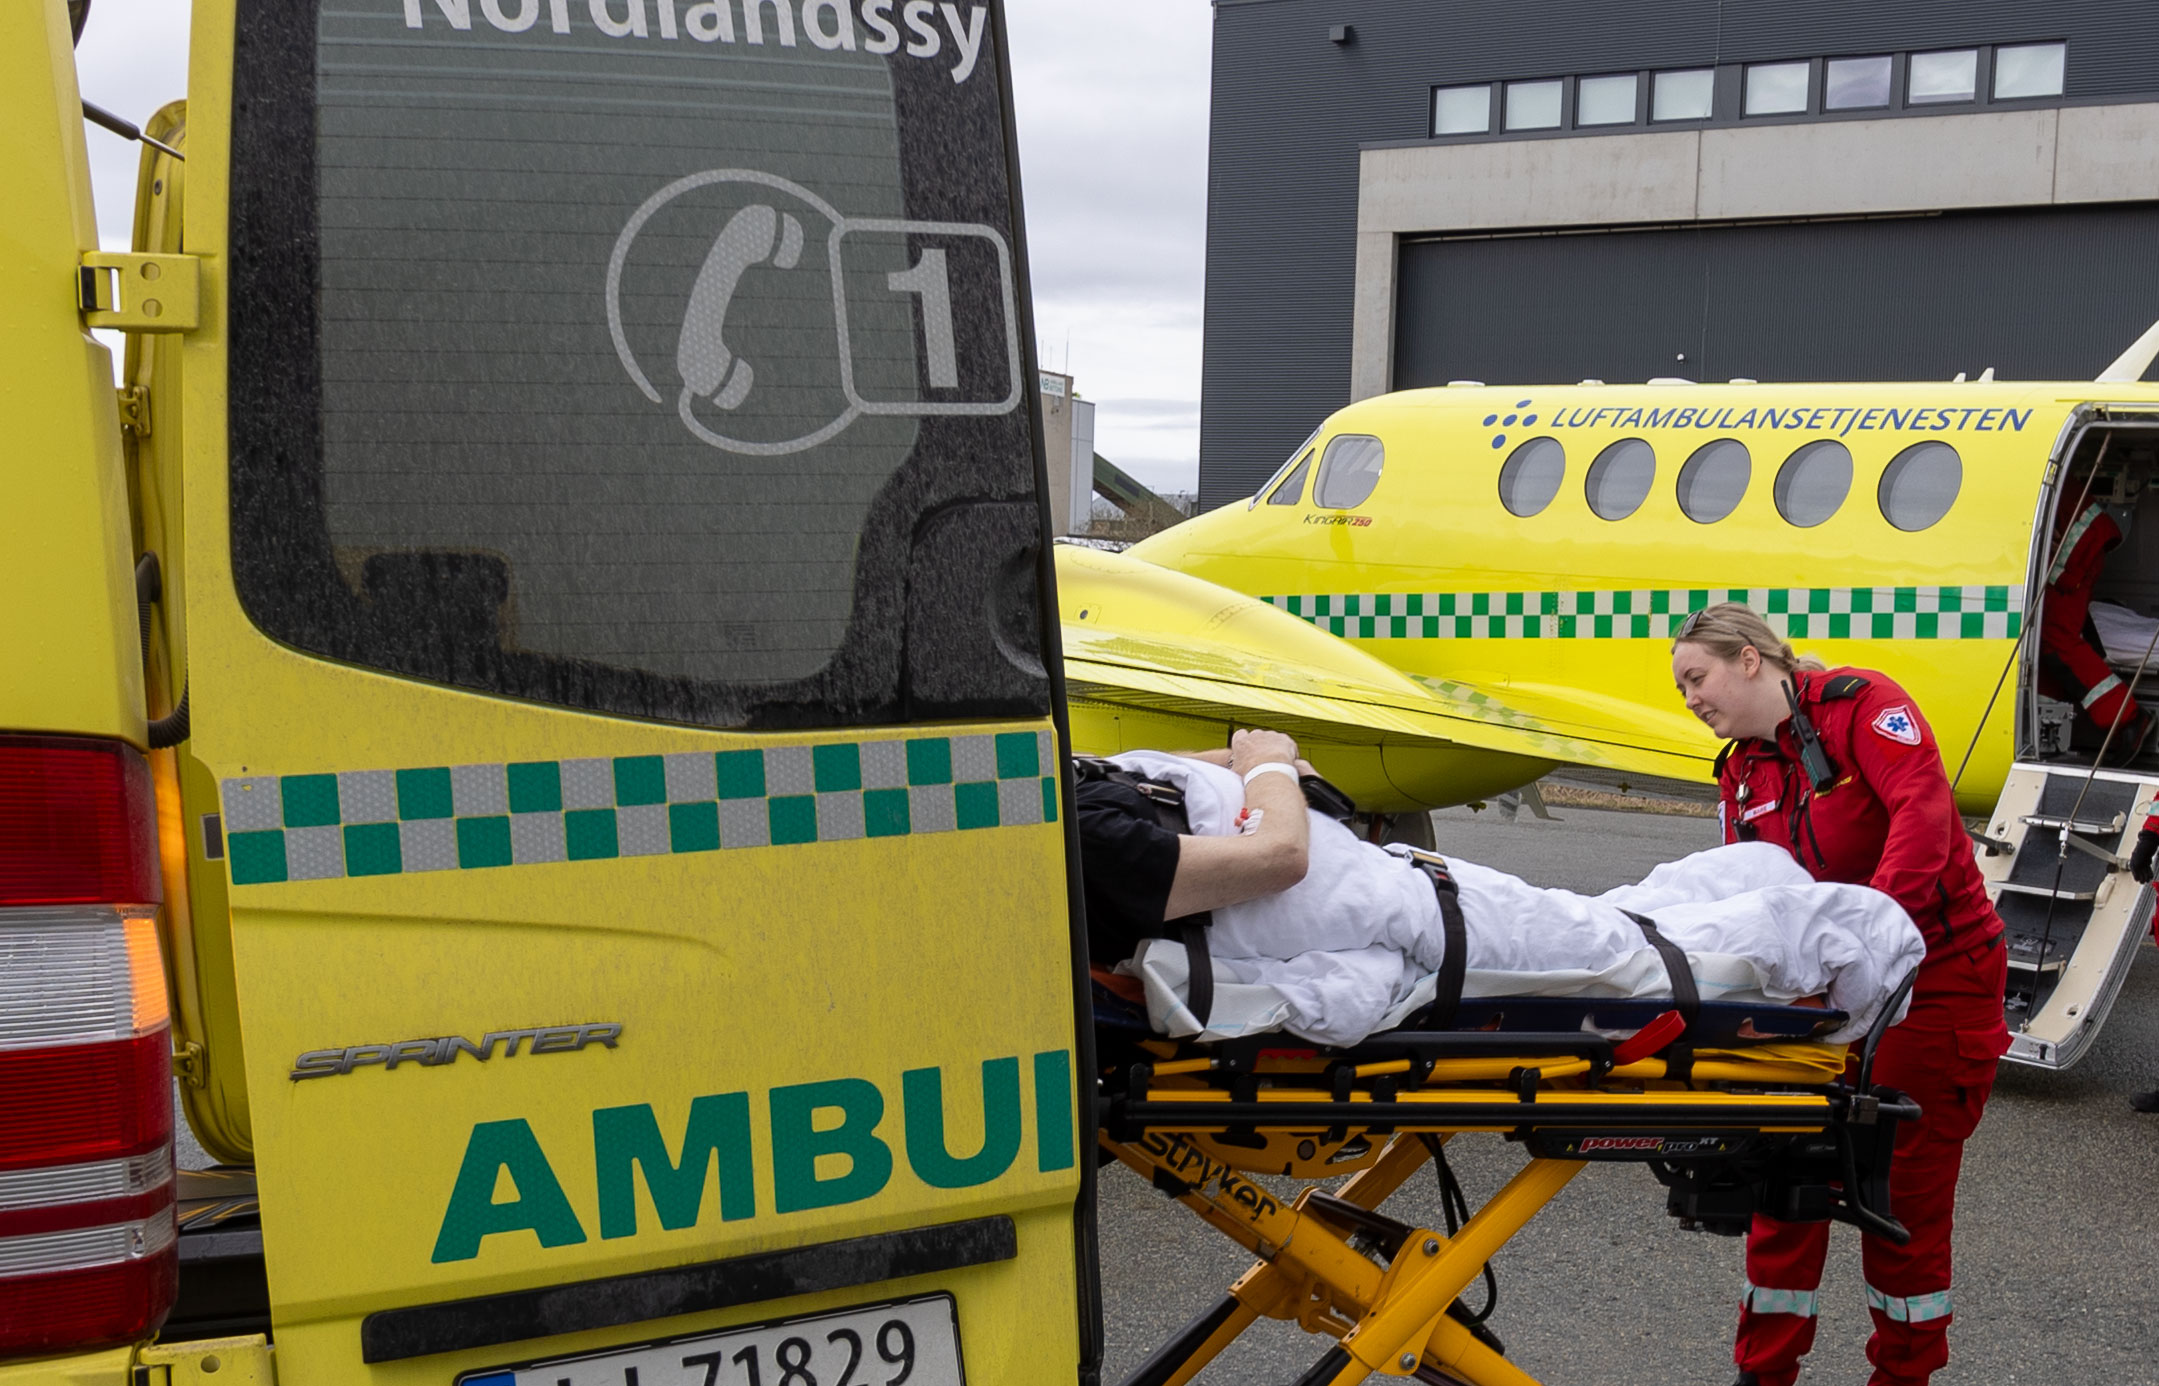 Ambulansefly i Bodø. Illustrasjonsfoto: Jørn Finsrud.